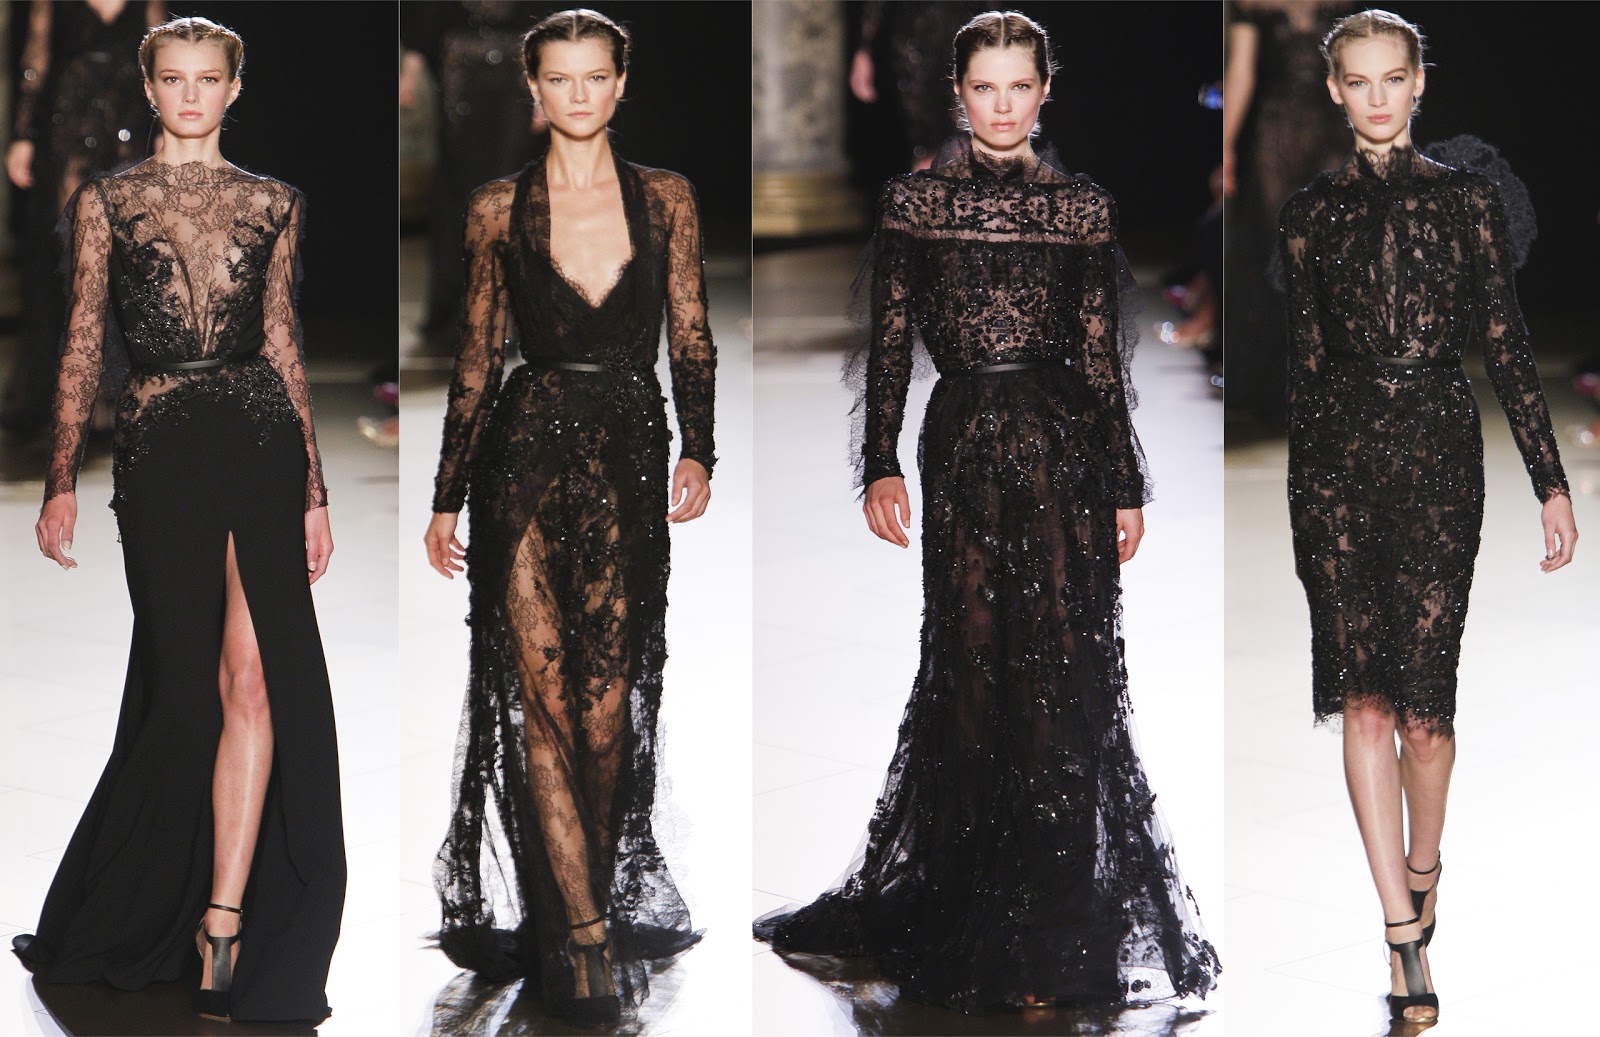 http://1.bp.blogspot.com/-mVA52mt0ATI/UKQpg8p-fQI/AAAAAAAAAr4/85OlXWpegWo/s1600/elie-saab-haute-couture-fall-winter-2012-2013-collection-runway-black-lace-dresses.jpg